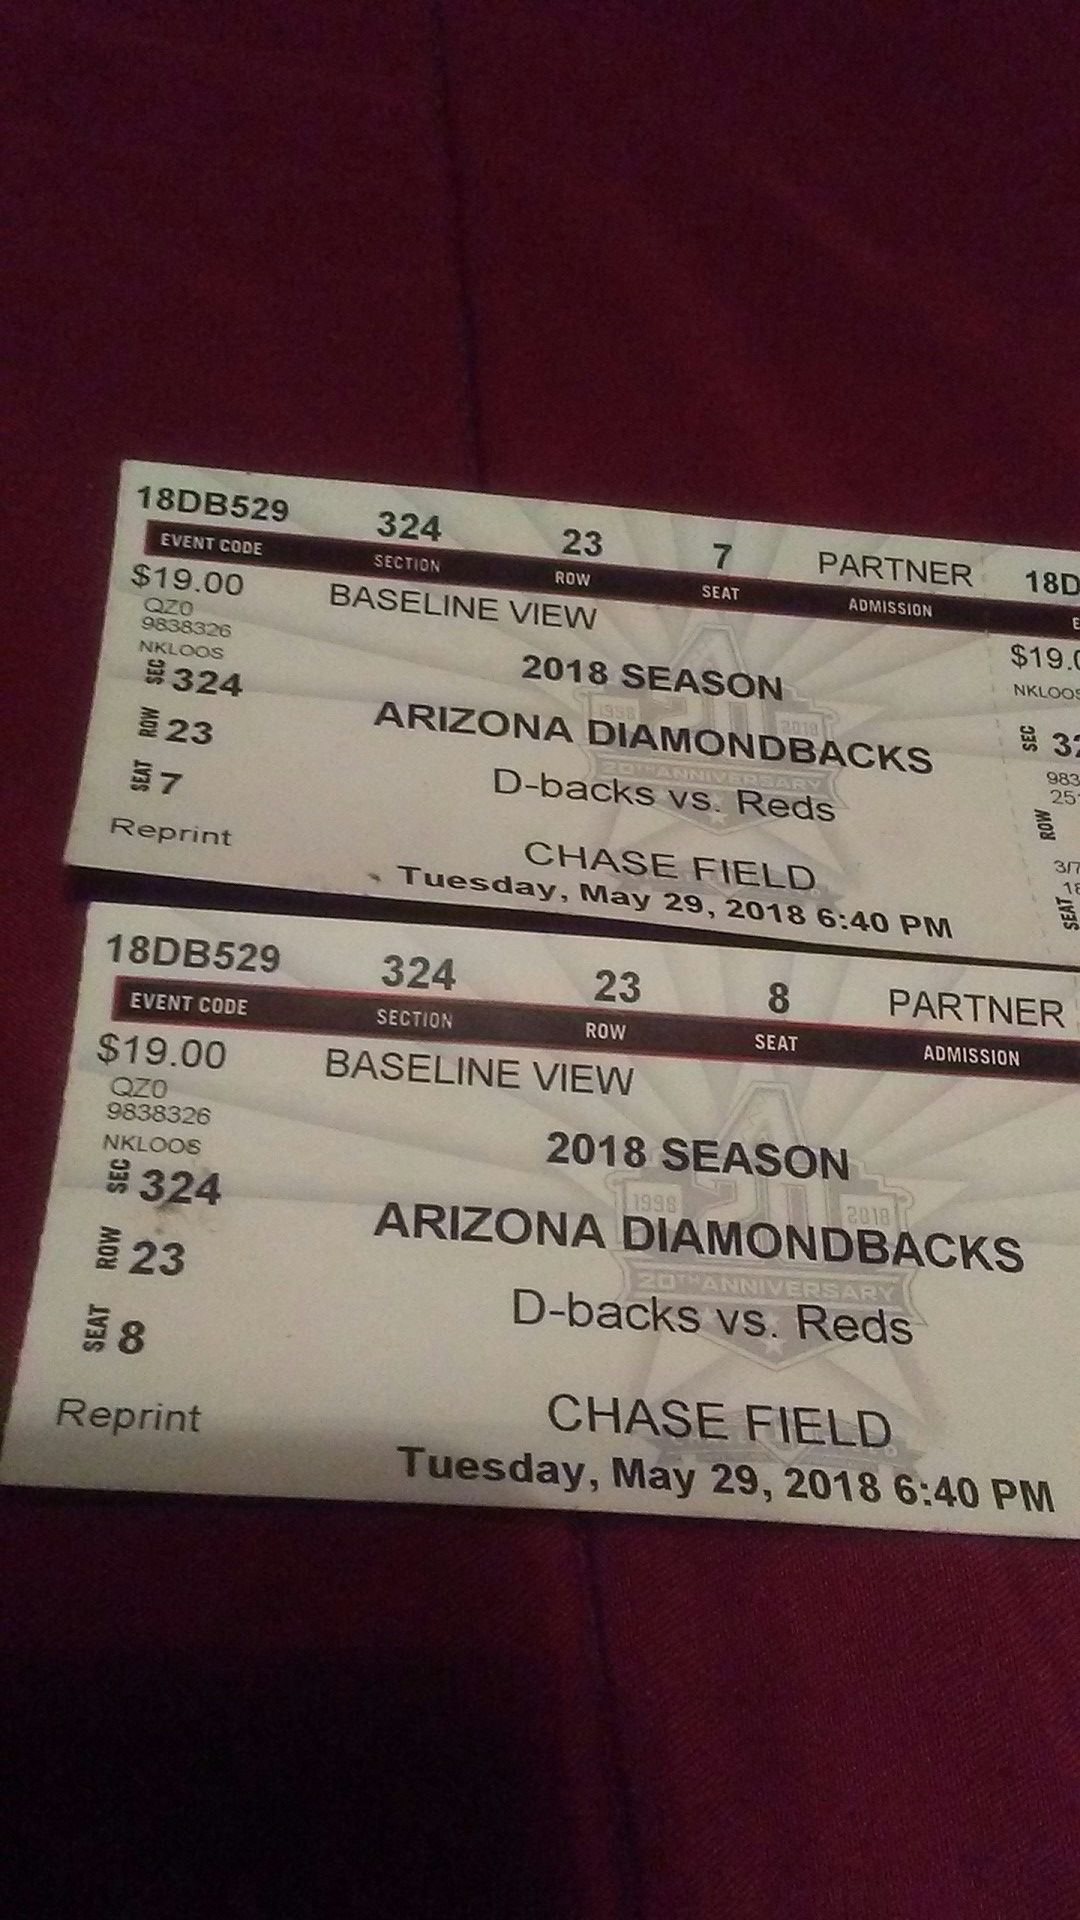 Arizona Diamondbacks game today